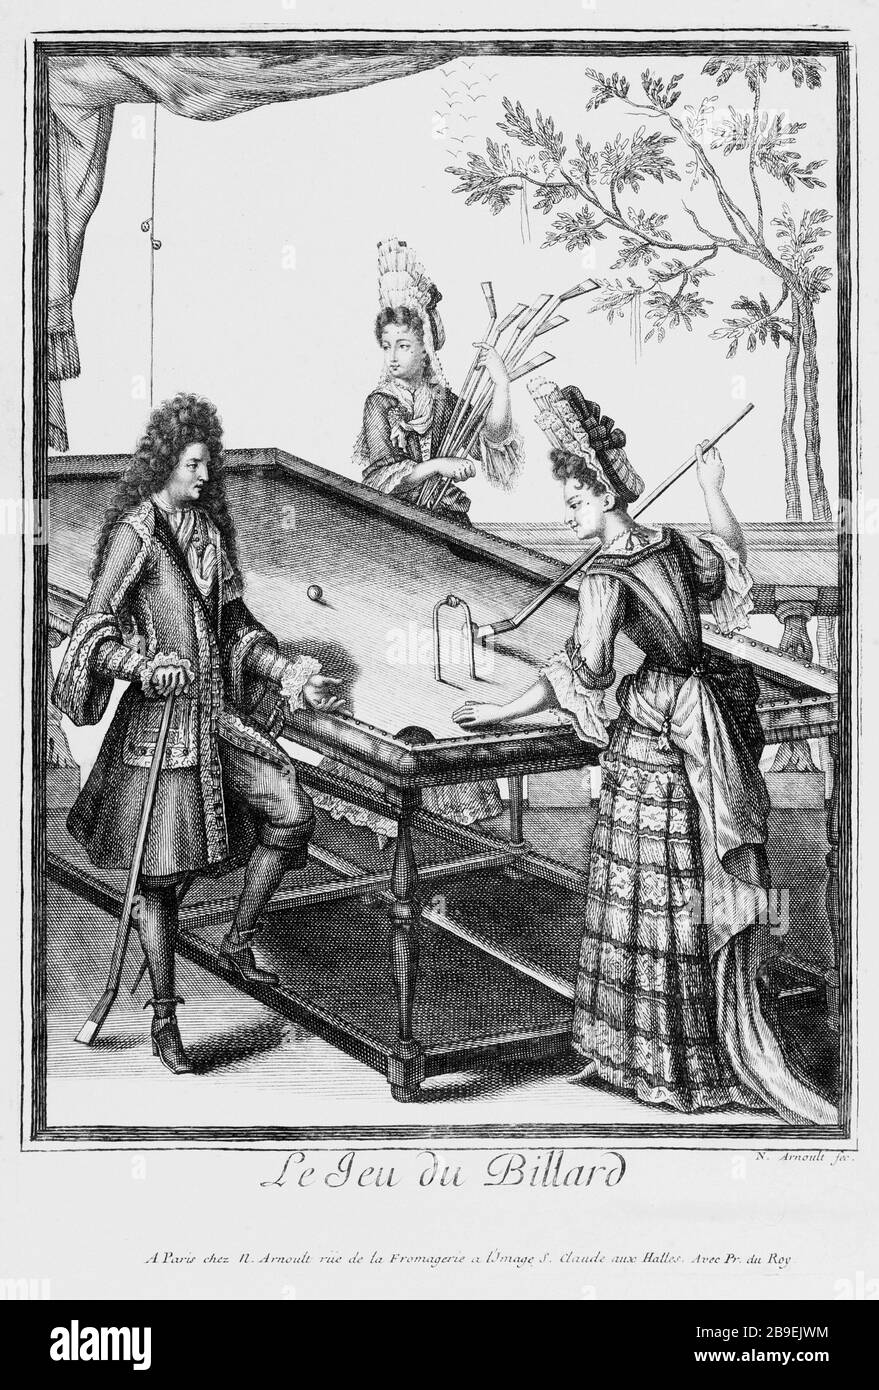 Il gioco dei biliardo Nicolas Arnoult (vers 1650- vers 1722). "Le jeu du billard". Gravure. Parigi, musée Carnavalet. Foto Stock